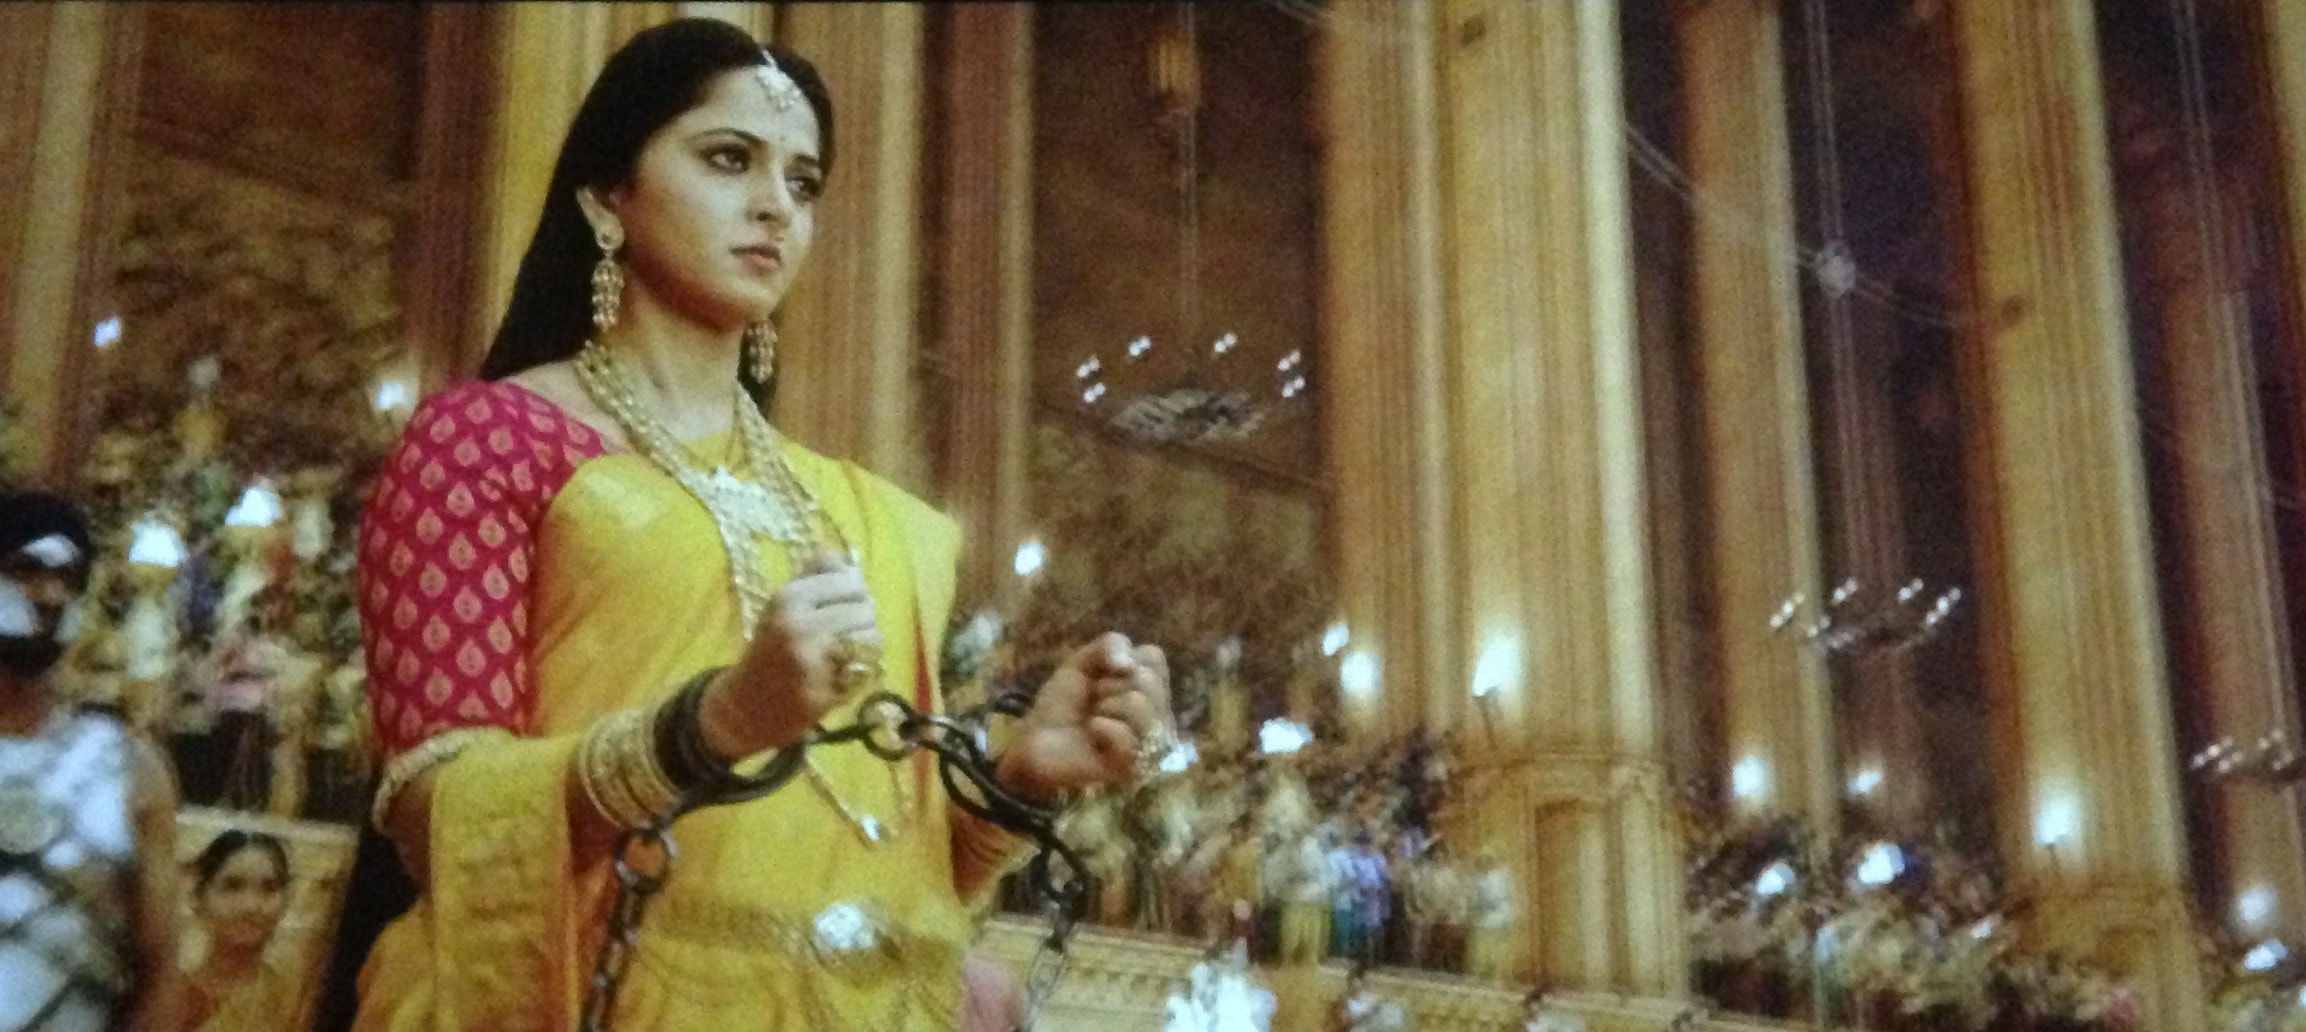 Anushka Shetty yellow saree in bahubali 2 The conclusion, Anushka Shetty handcuffed scene in bahubali 2 